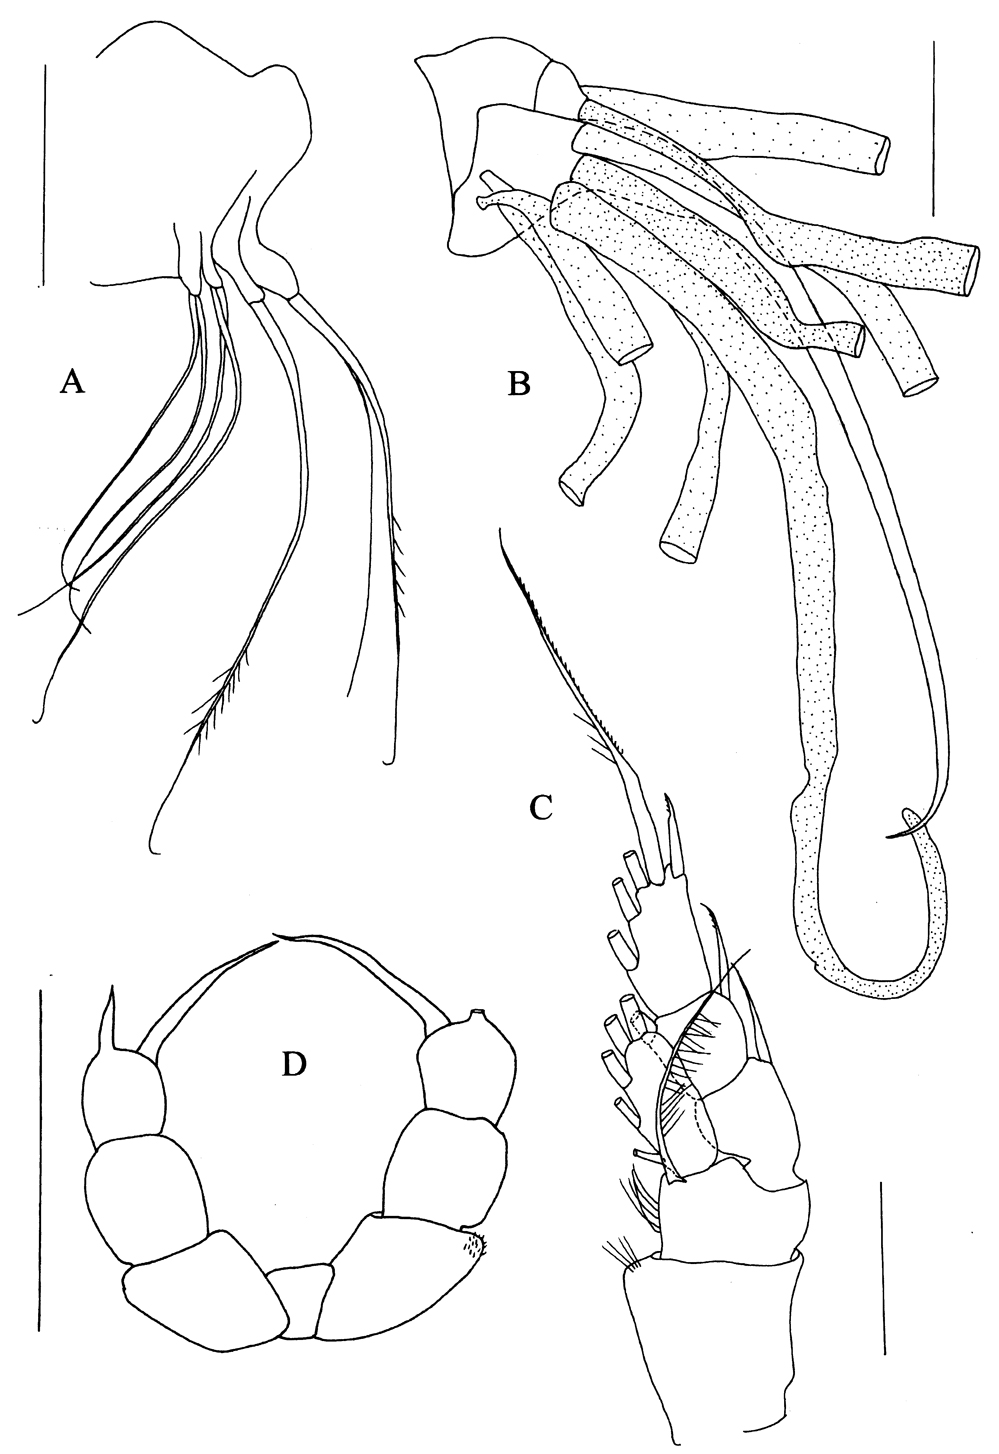 Species Kyphocalanus sp.1 - Plate 3 of morphological figures